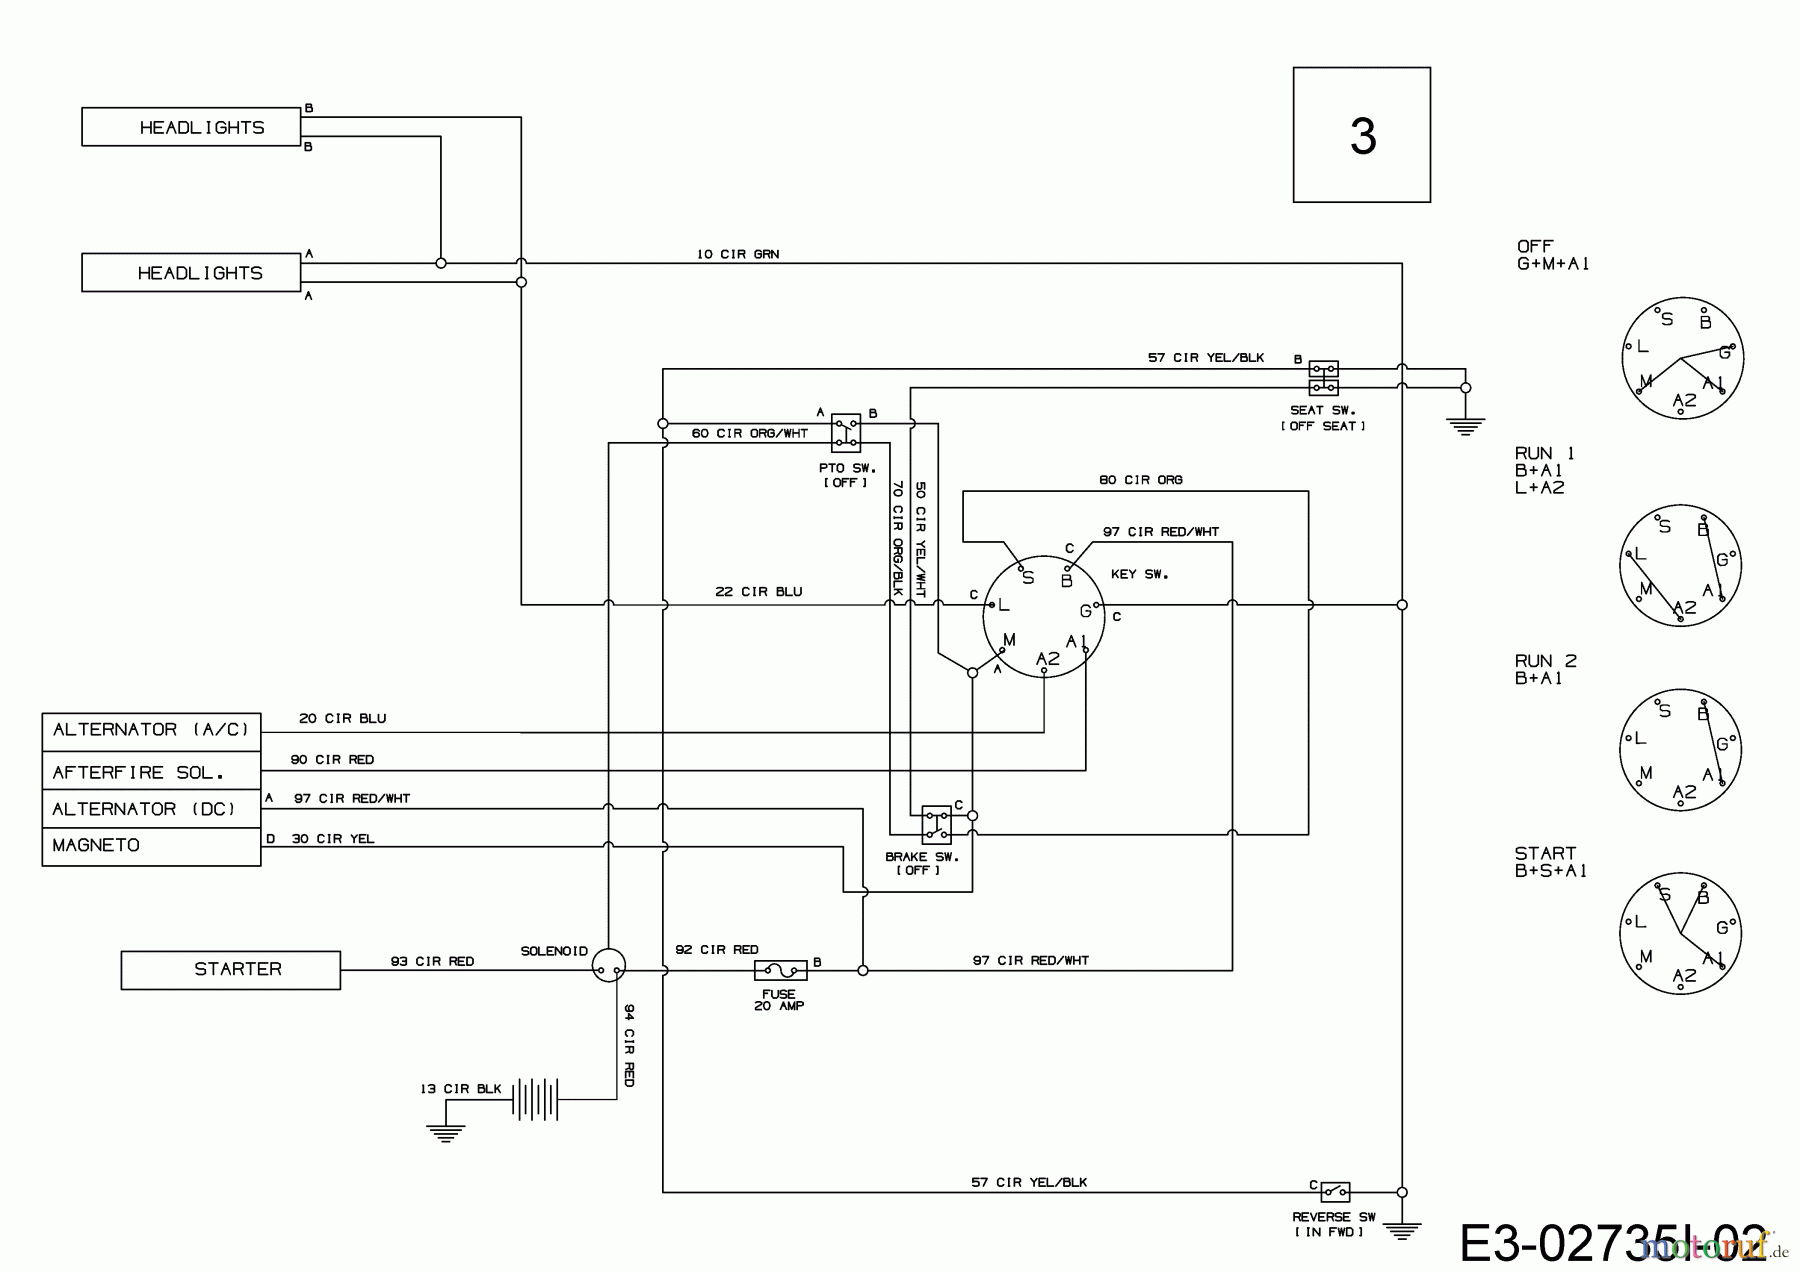  Bestgreen Lawn tractors BG 96 SBK 13H2765F655  (2019) Wiring diagram